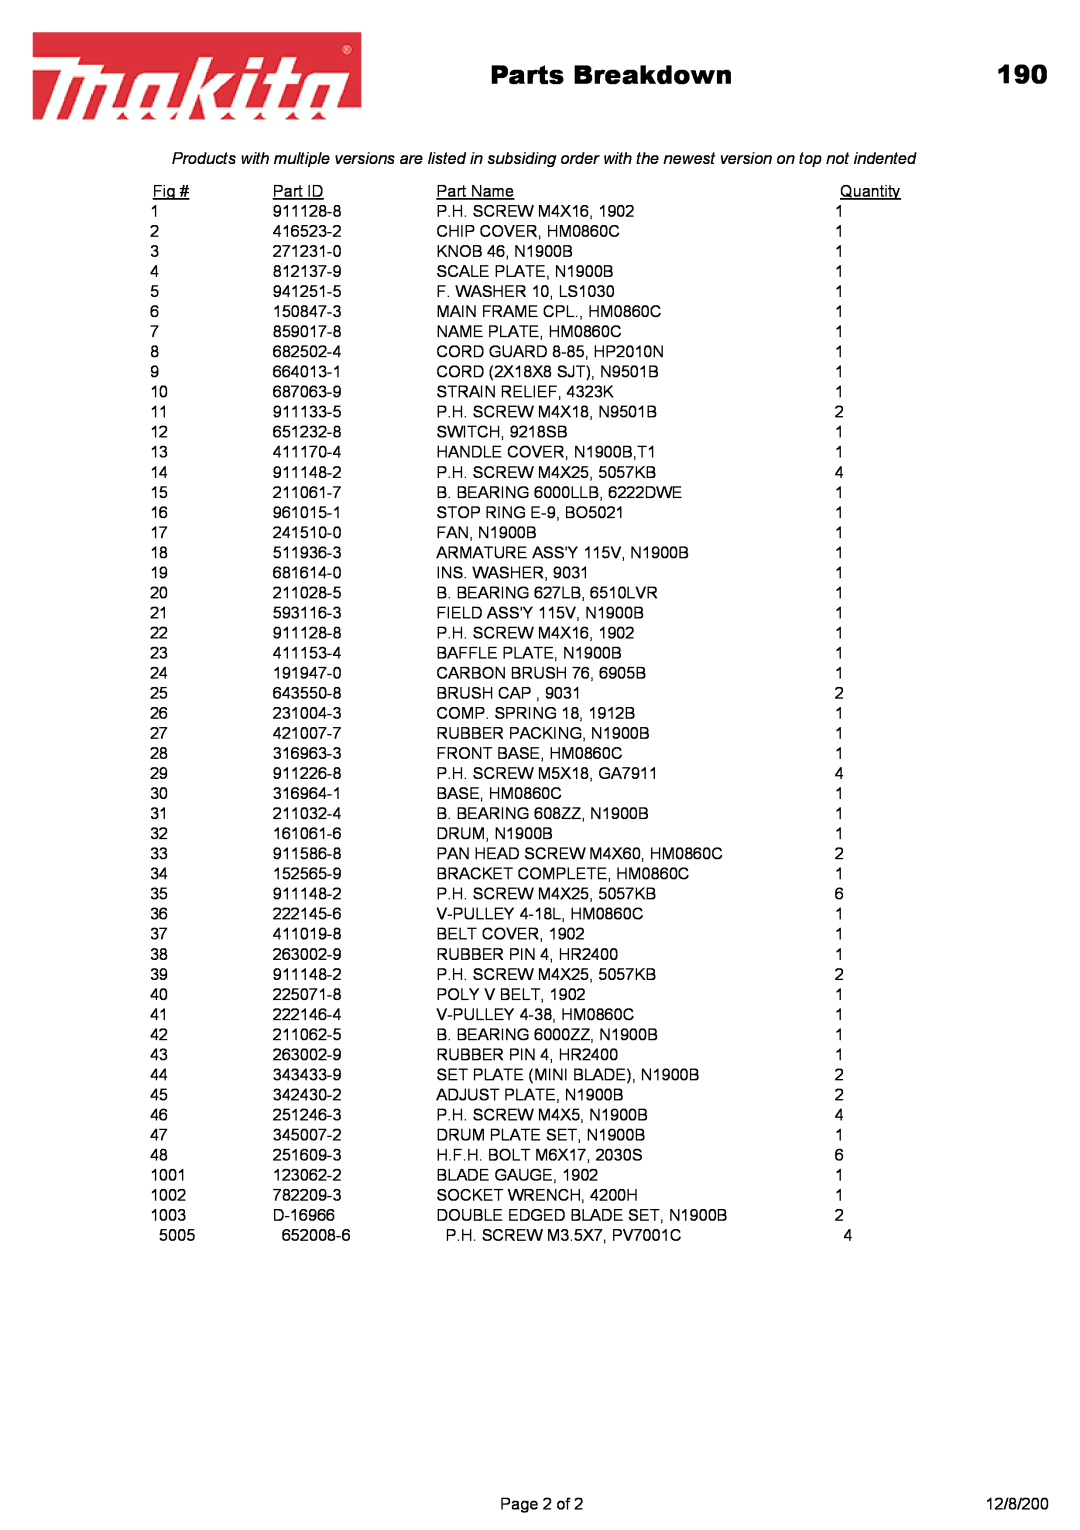 Makita 190 manual Page 2 of, Parts Breakdown, 12/8/200 